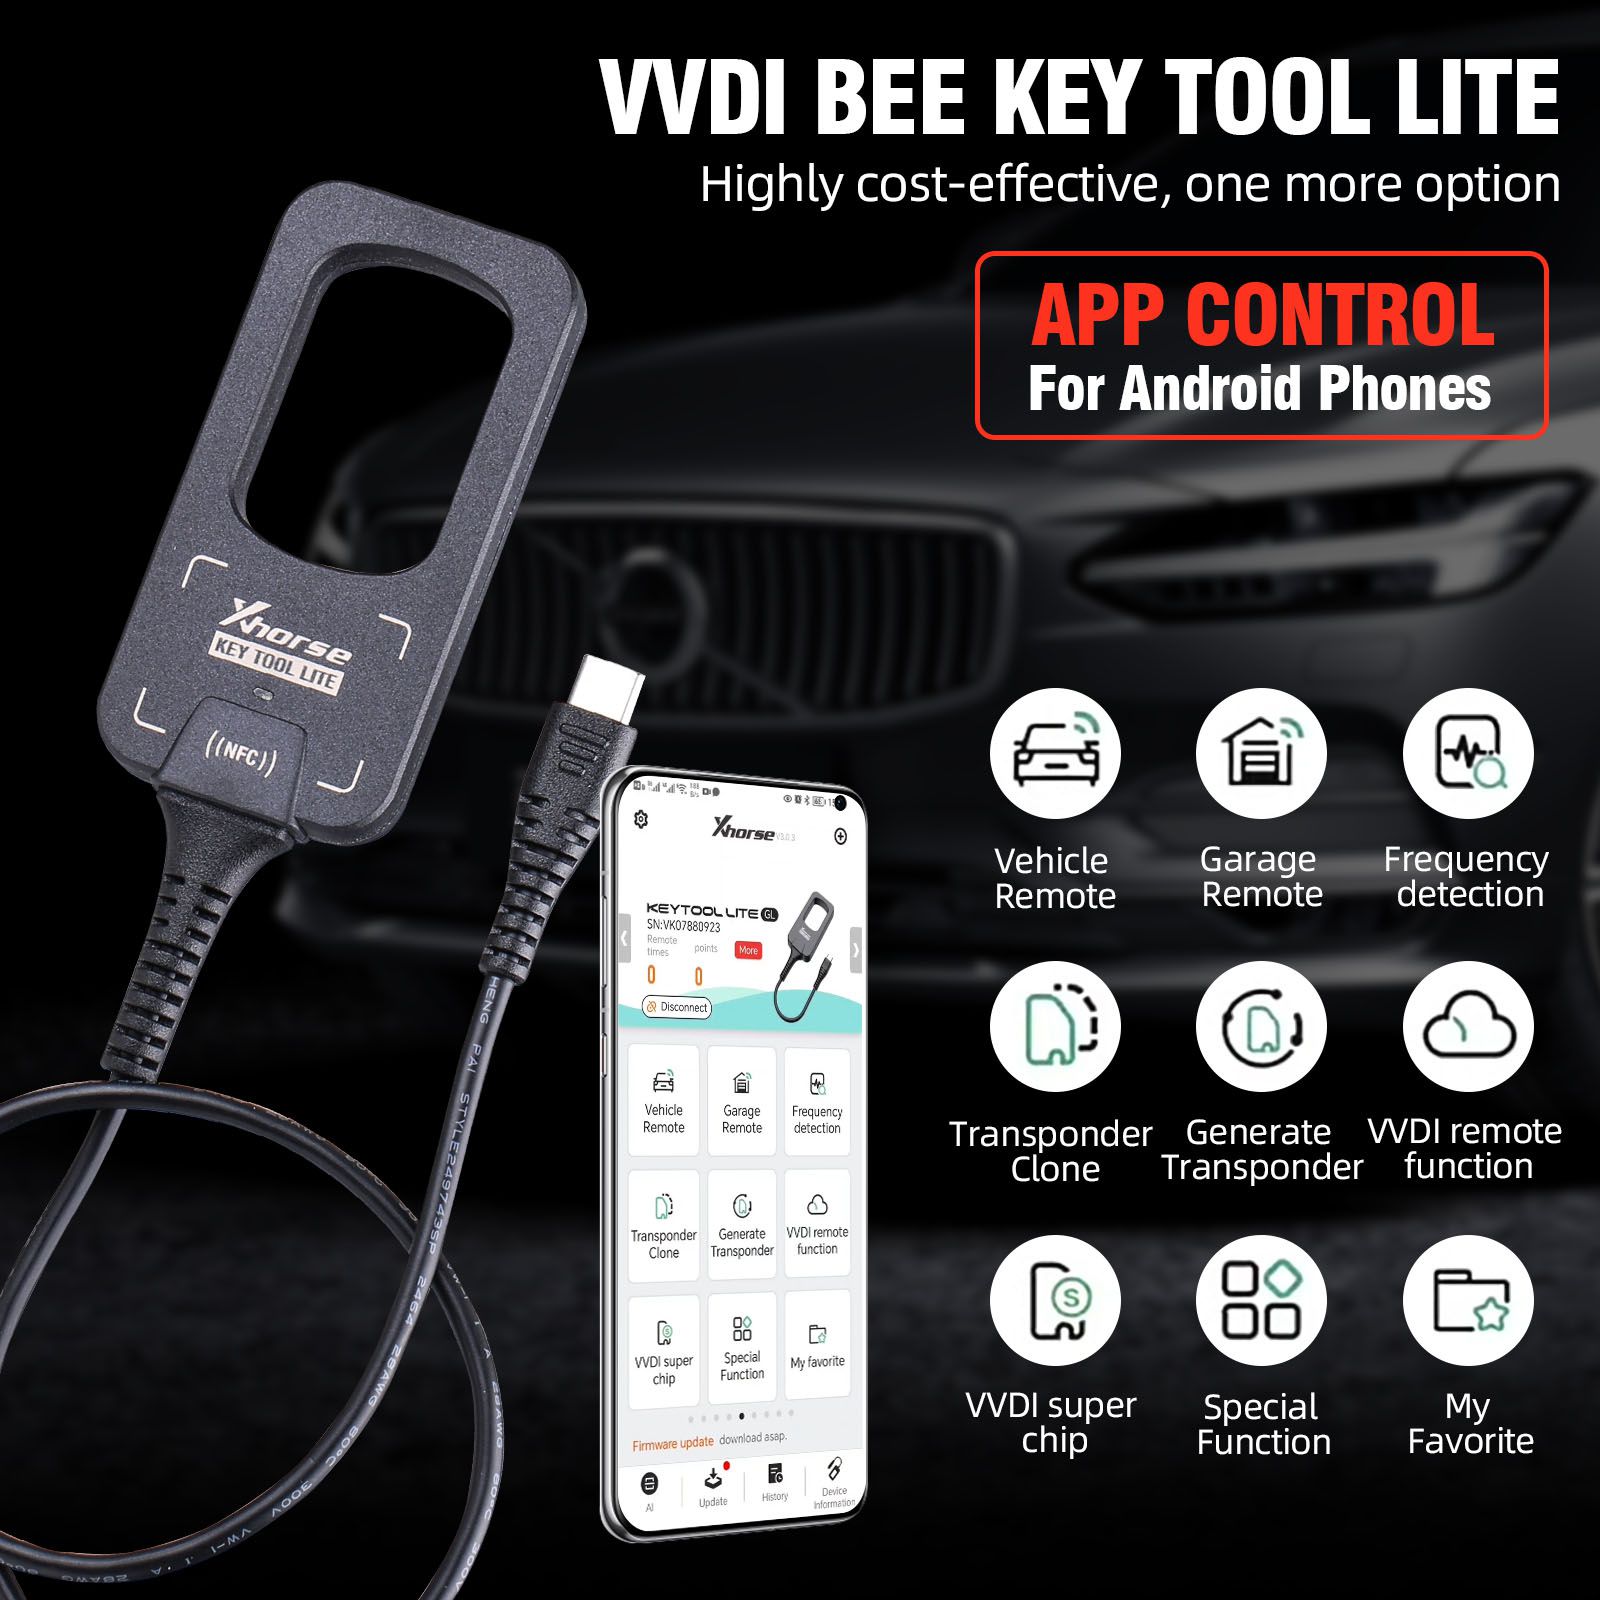 2023 xhorse vvdi Bee Key Tool Lite frecue Detection transpondedor clone android phone recibe 6 xkb501en remote control de forma gratuita